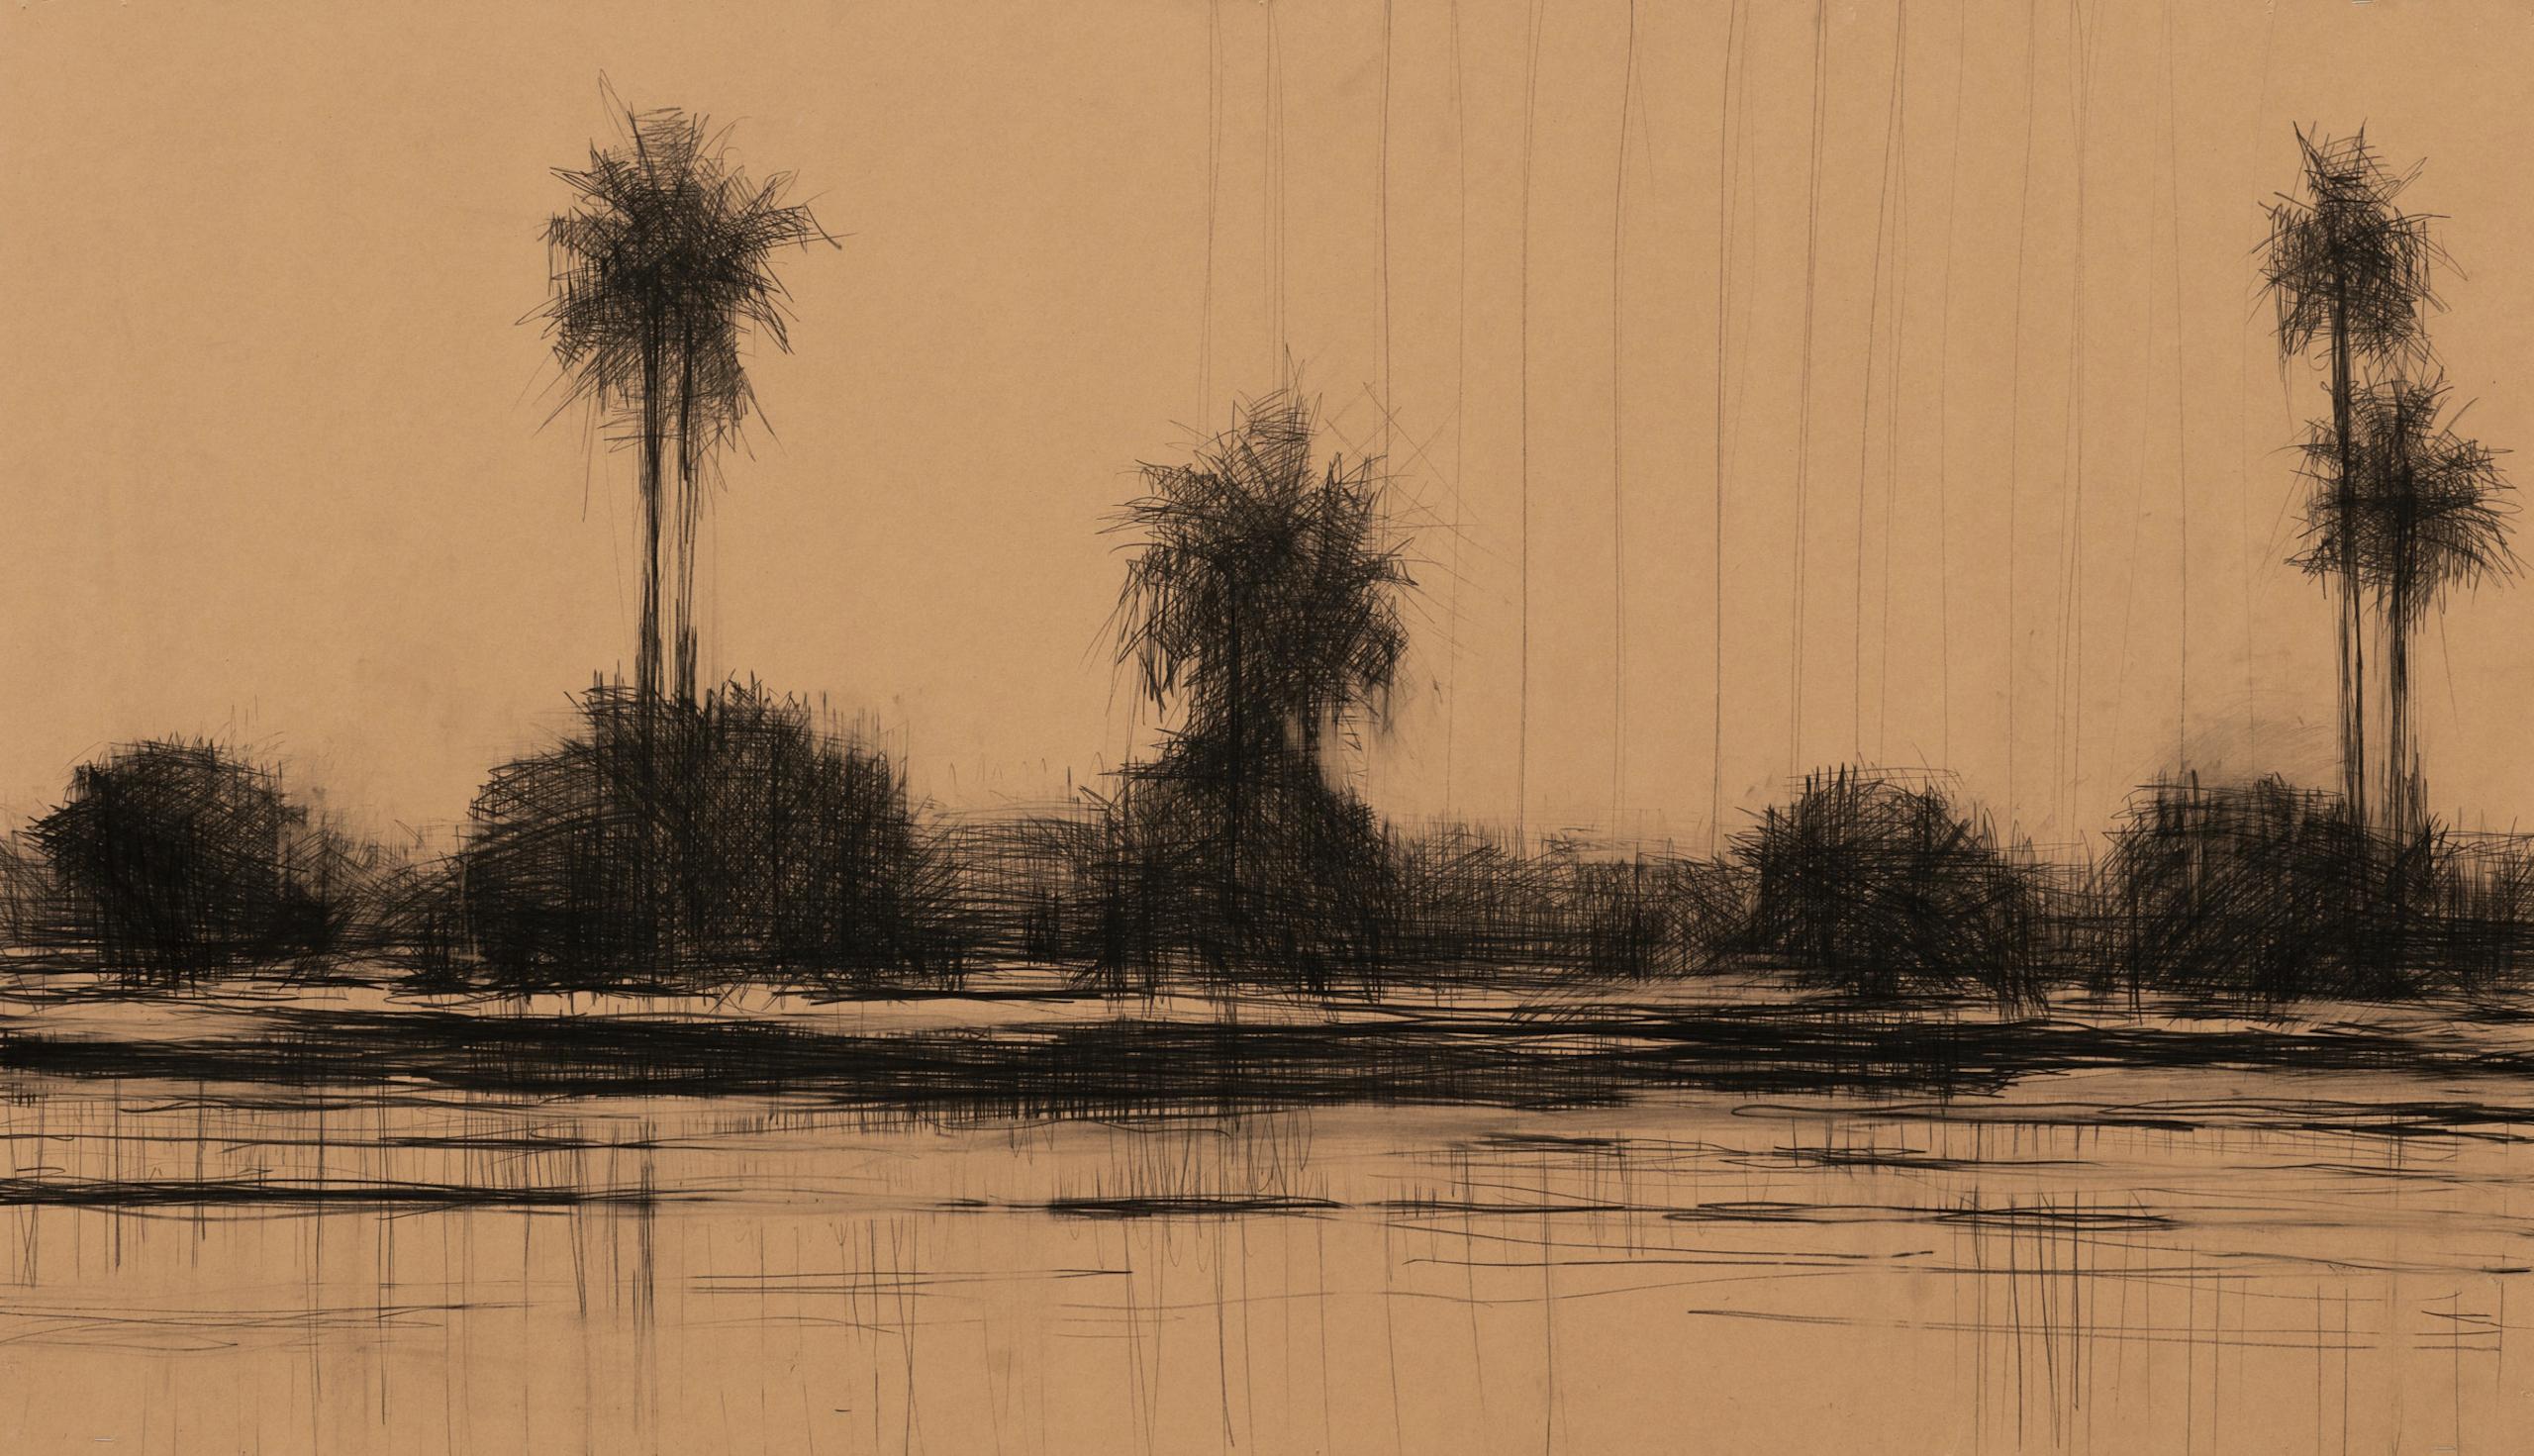 Mangroves in Casamance No.1 by Calo Carratalá - Senegal landscape painting